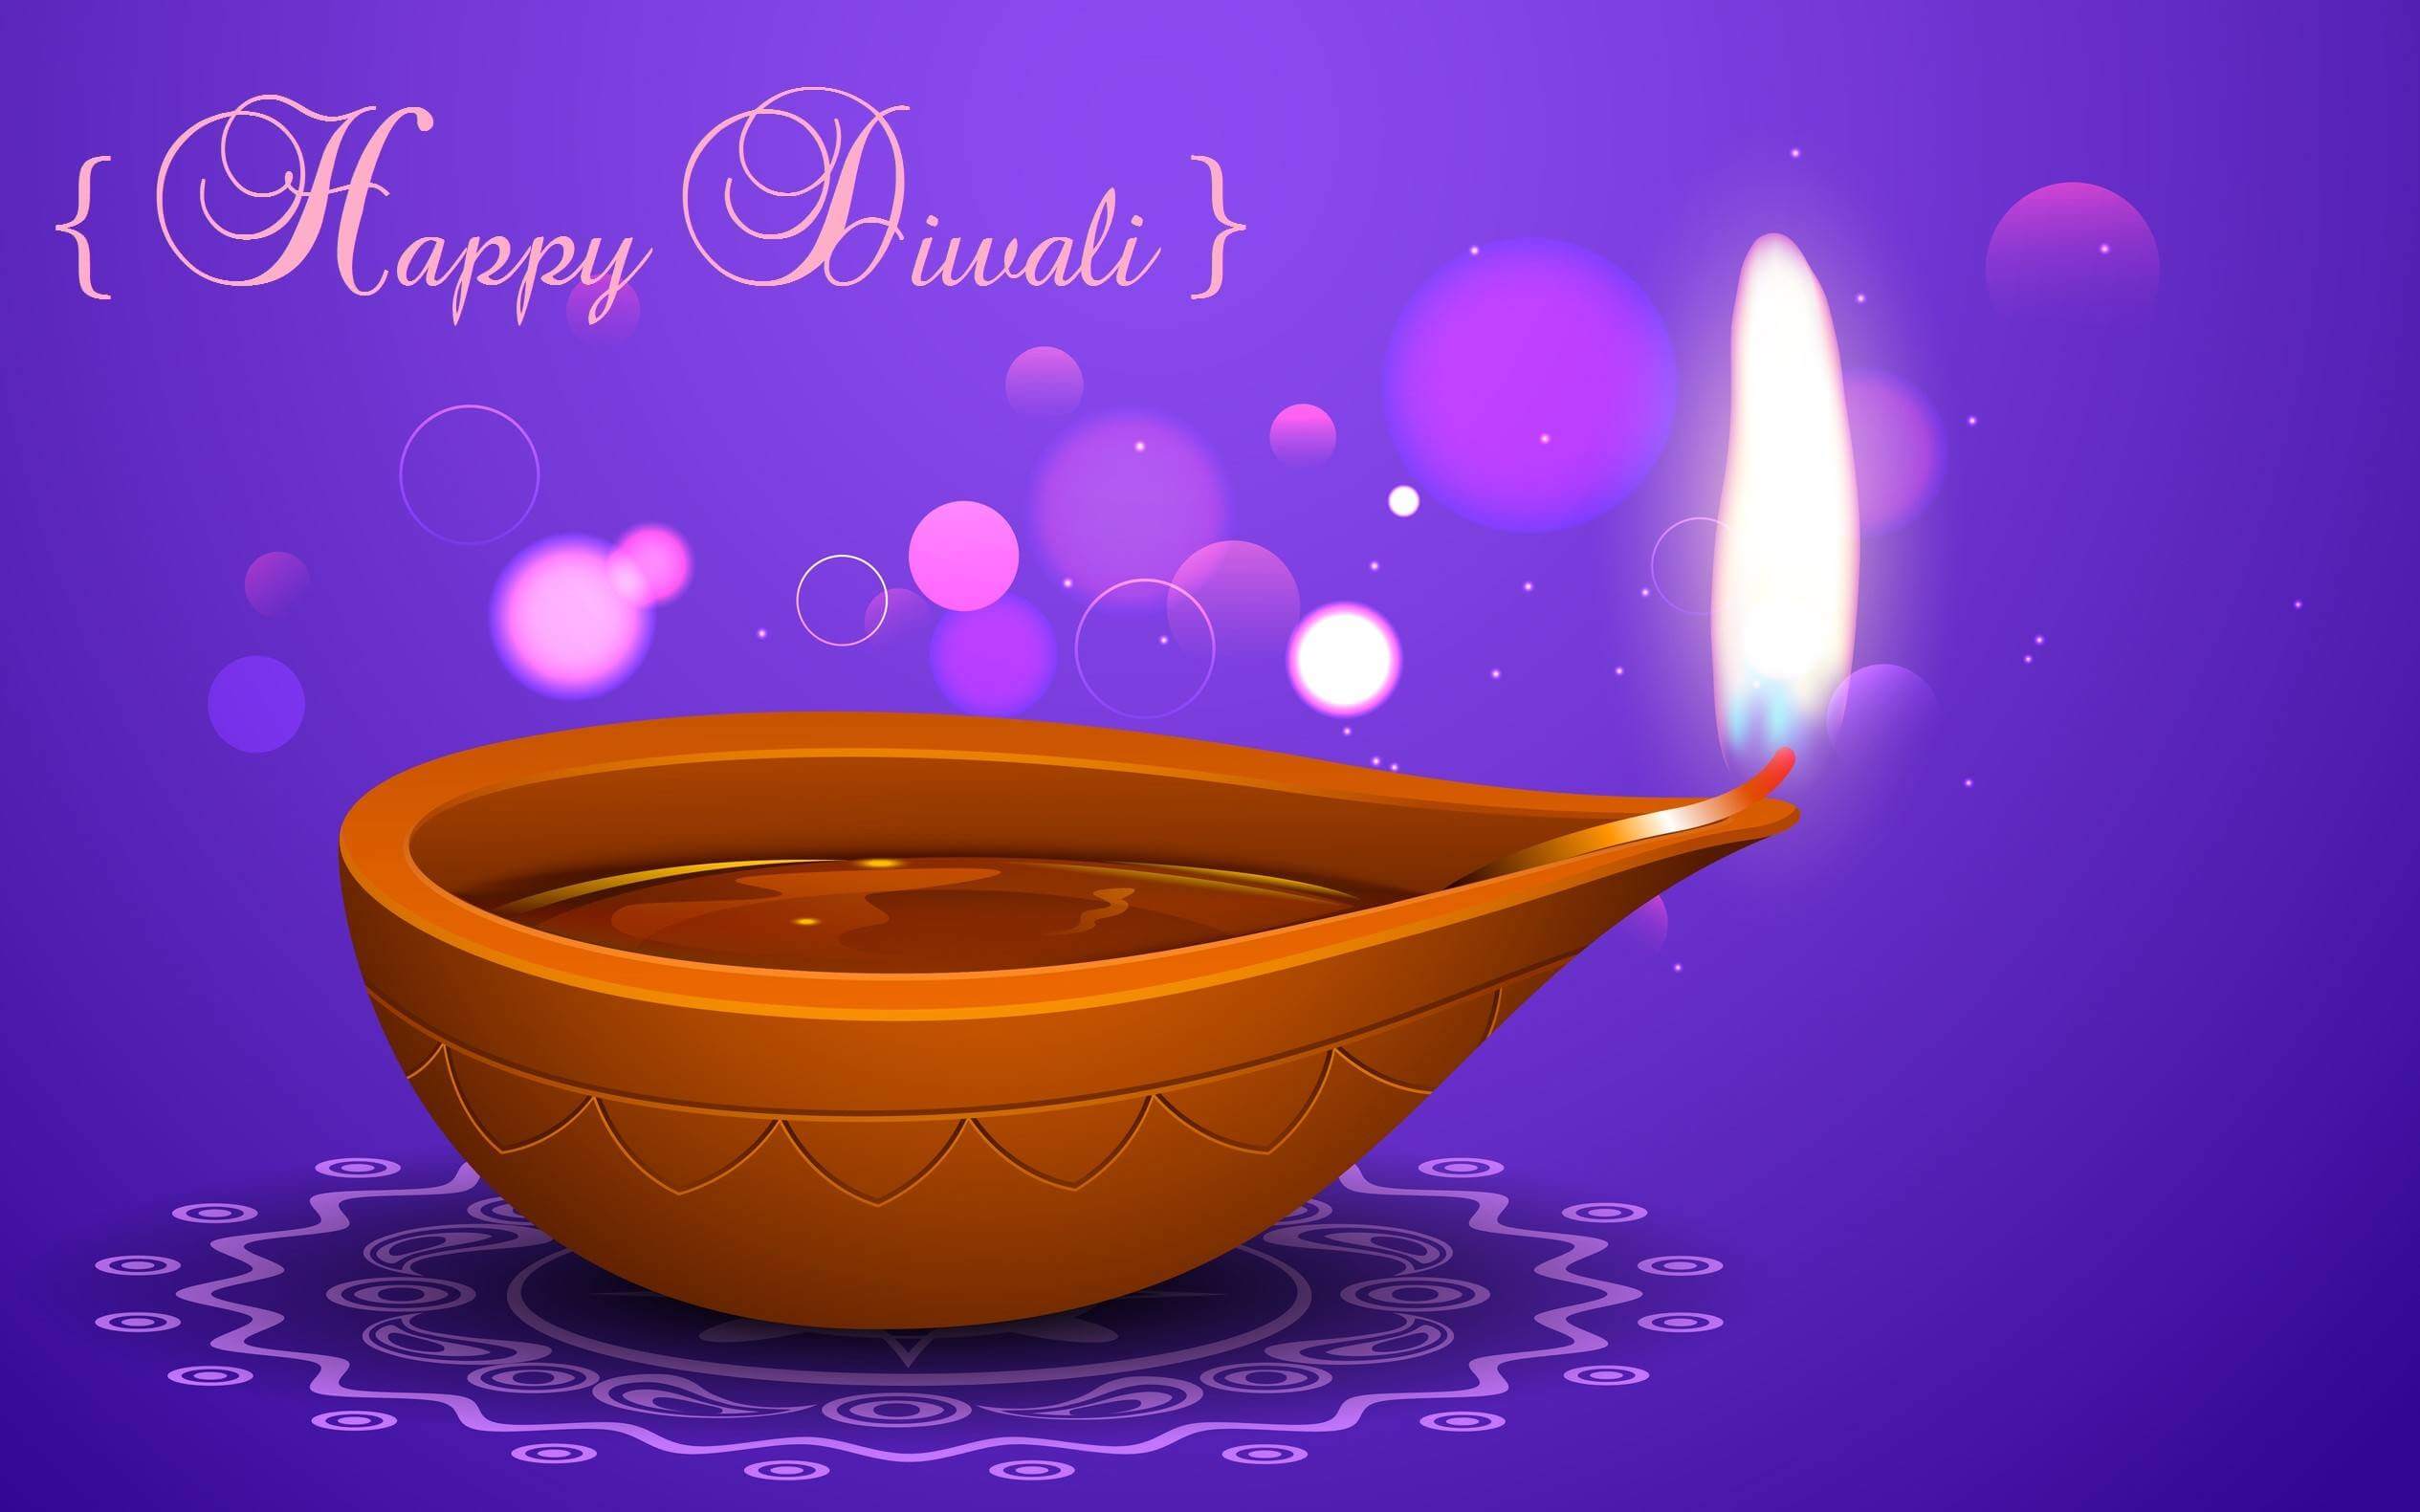 Download-Happy-Diwali-2015-HD-Wallpapers-facebook-mobile-desktop-cgfrog-13